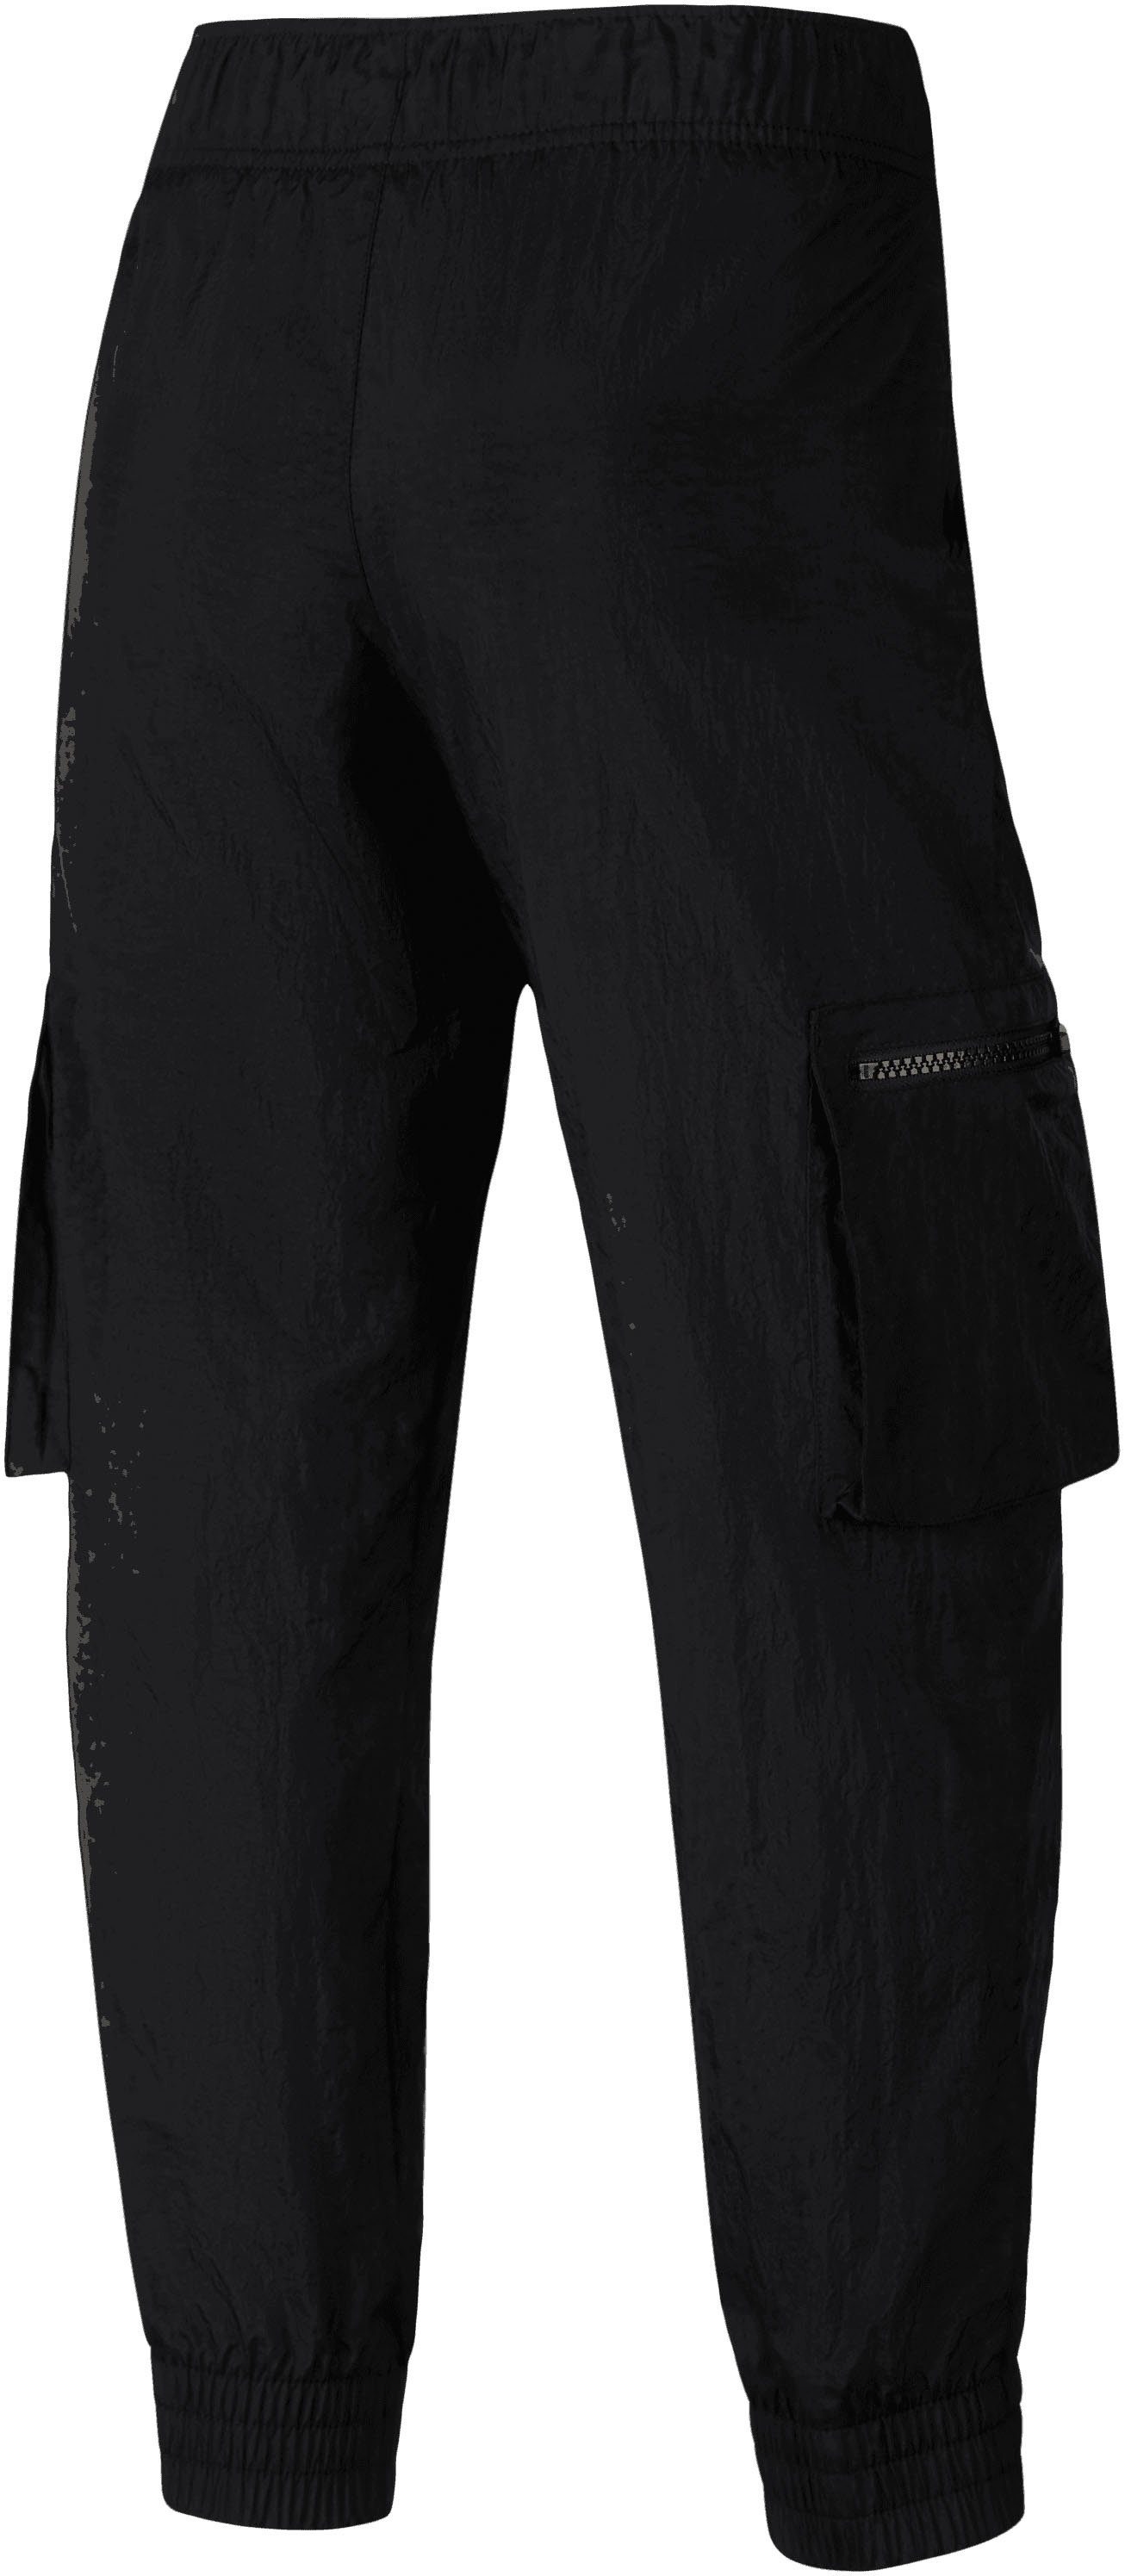 Woven (Girls) Nike Big Sporthose Pants BLACK/WHITE Cargo Sportswear Kids'